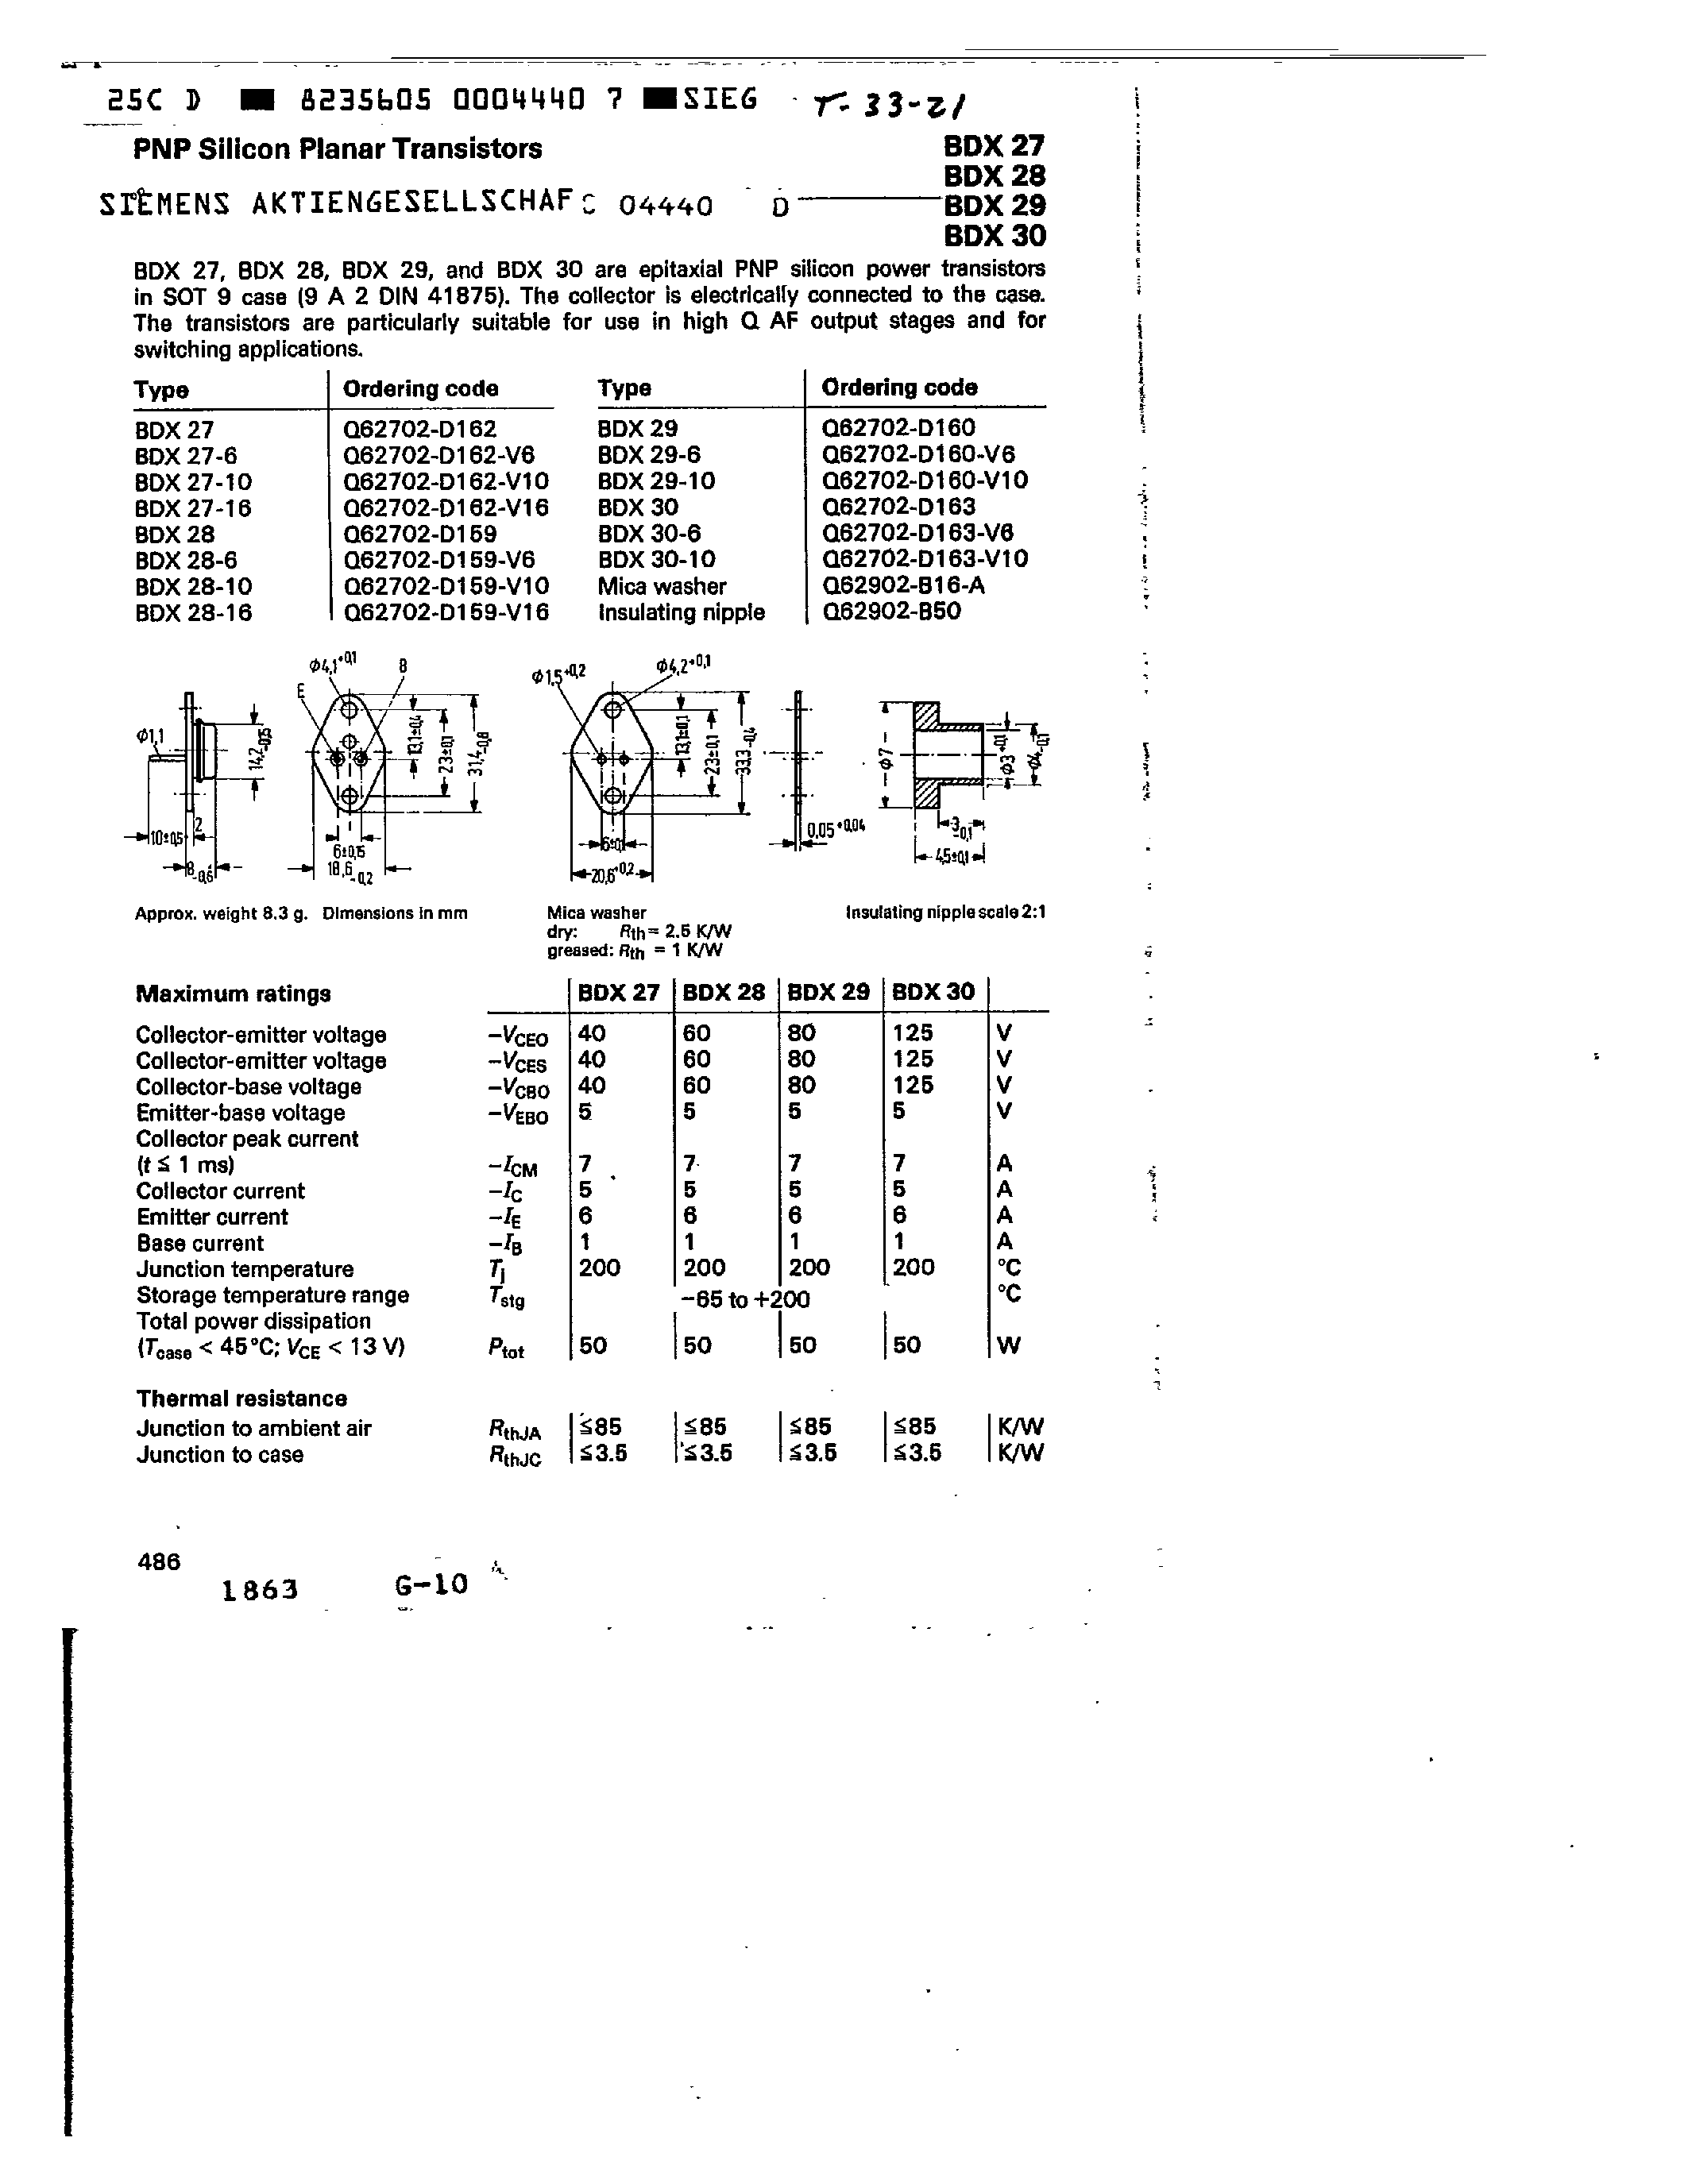 Datasheet BDX29-10 - PNP SILICON PLANAR TRANSISTORS page 1